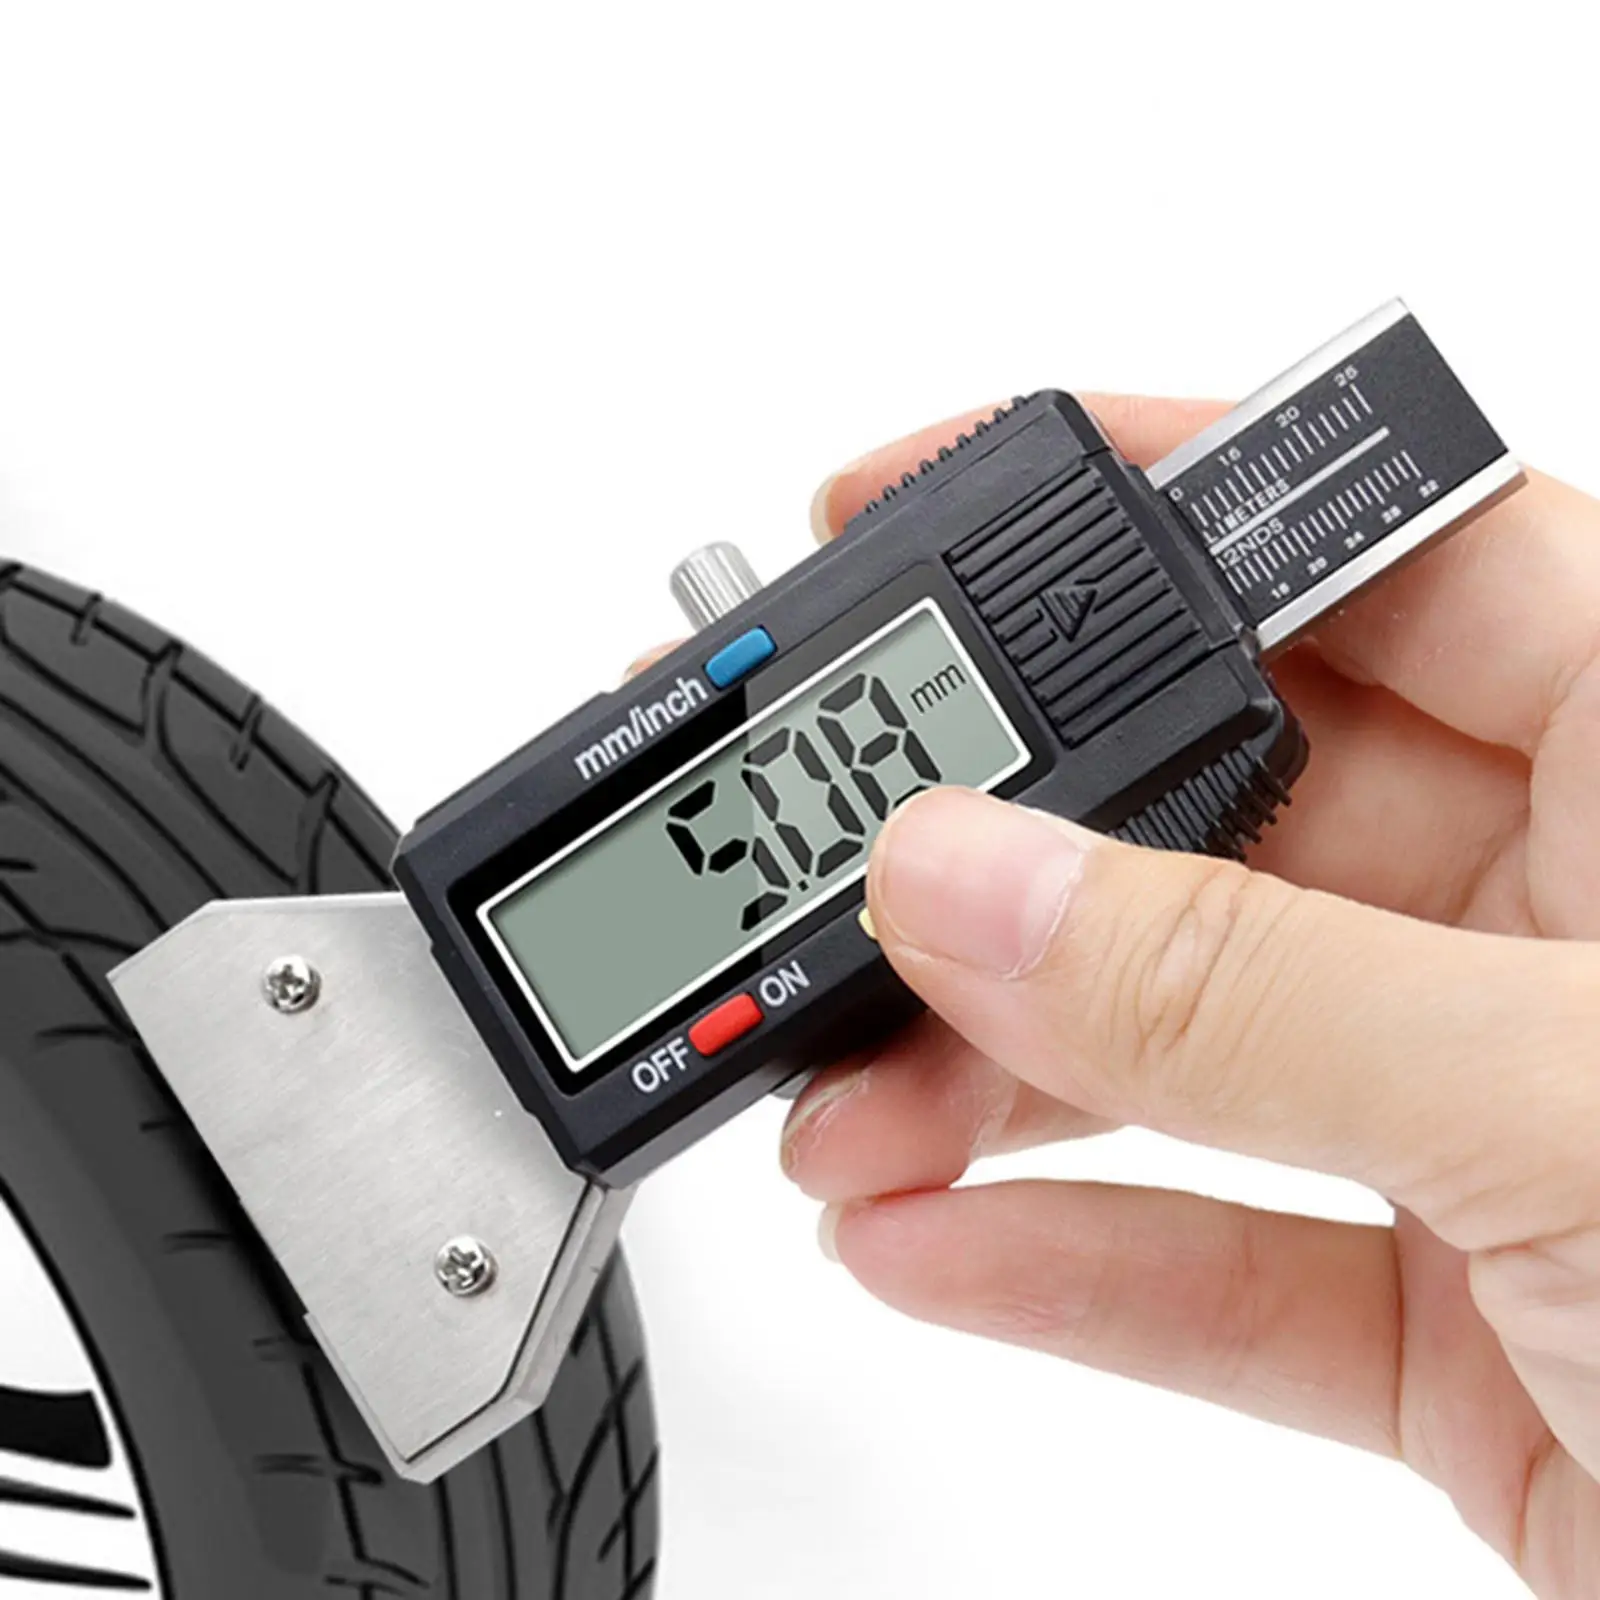 Digital Tyre Depth Gauge Tester Tire Thread Measuring Gauge Tool with Large LCD Display for Automobile Tire Trucks Vans SUV